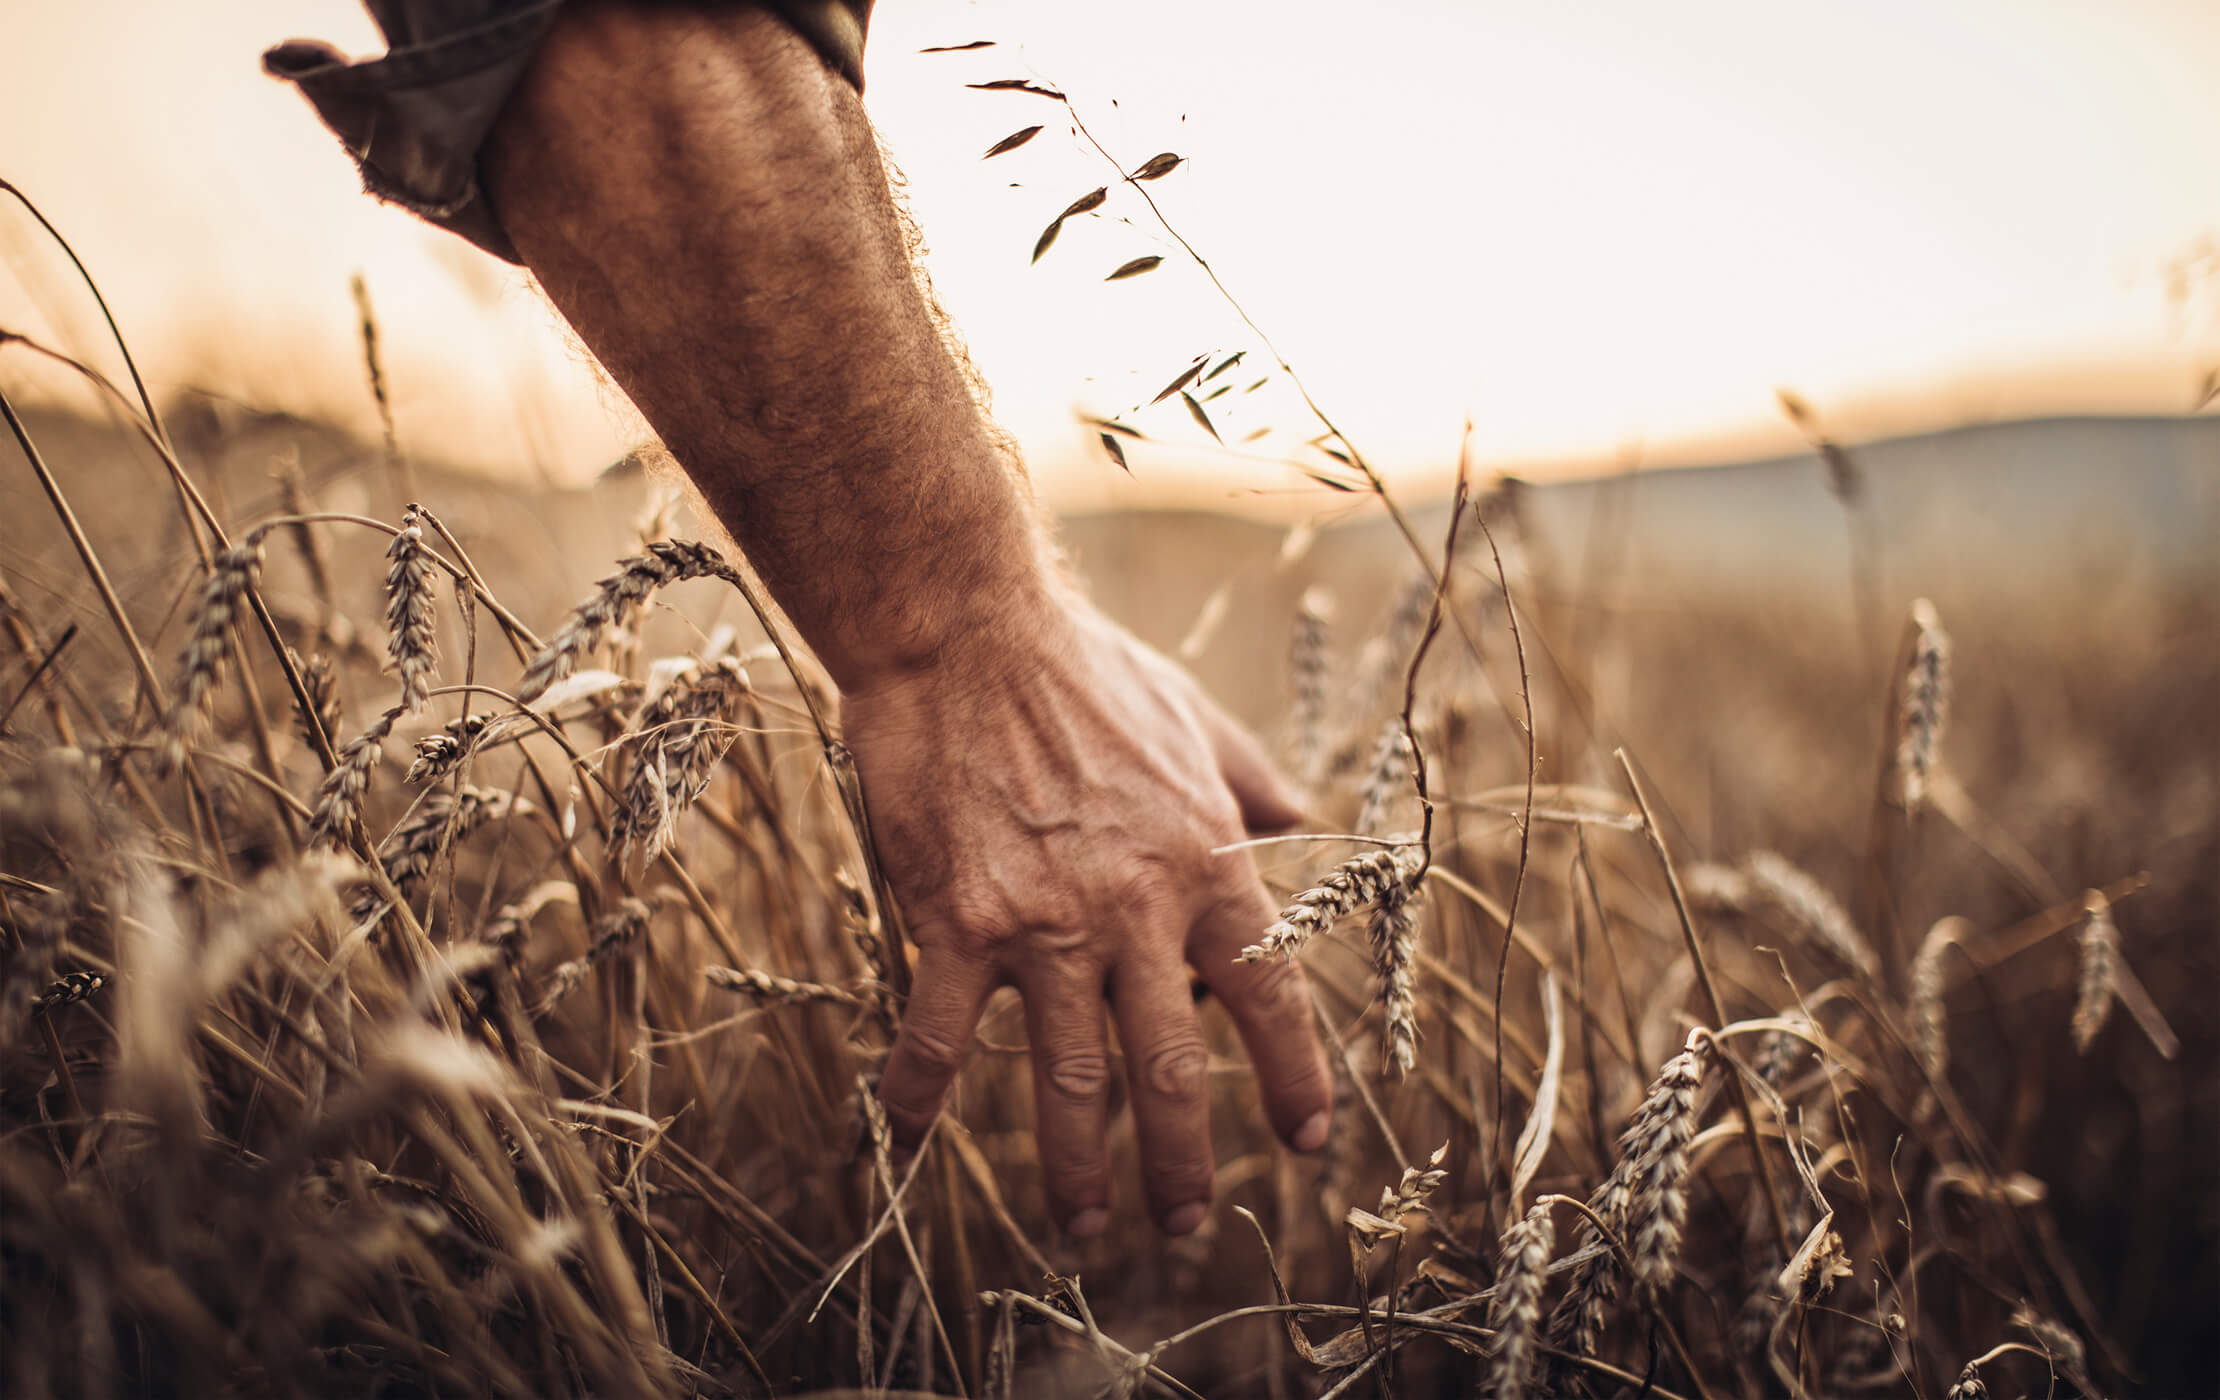 Close-up shot of male farmer, running his hands through a field of corn on a warm summer evening